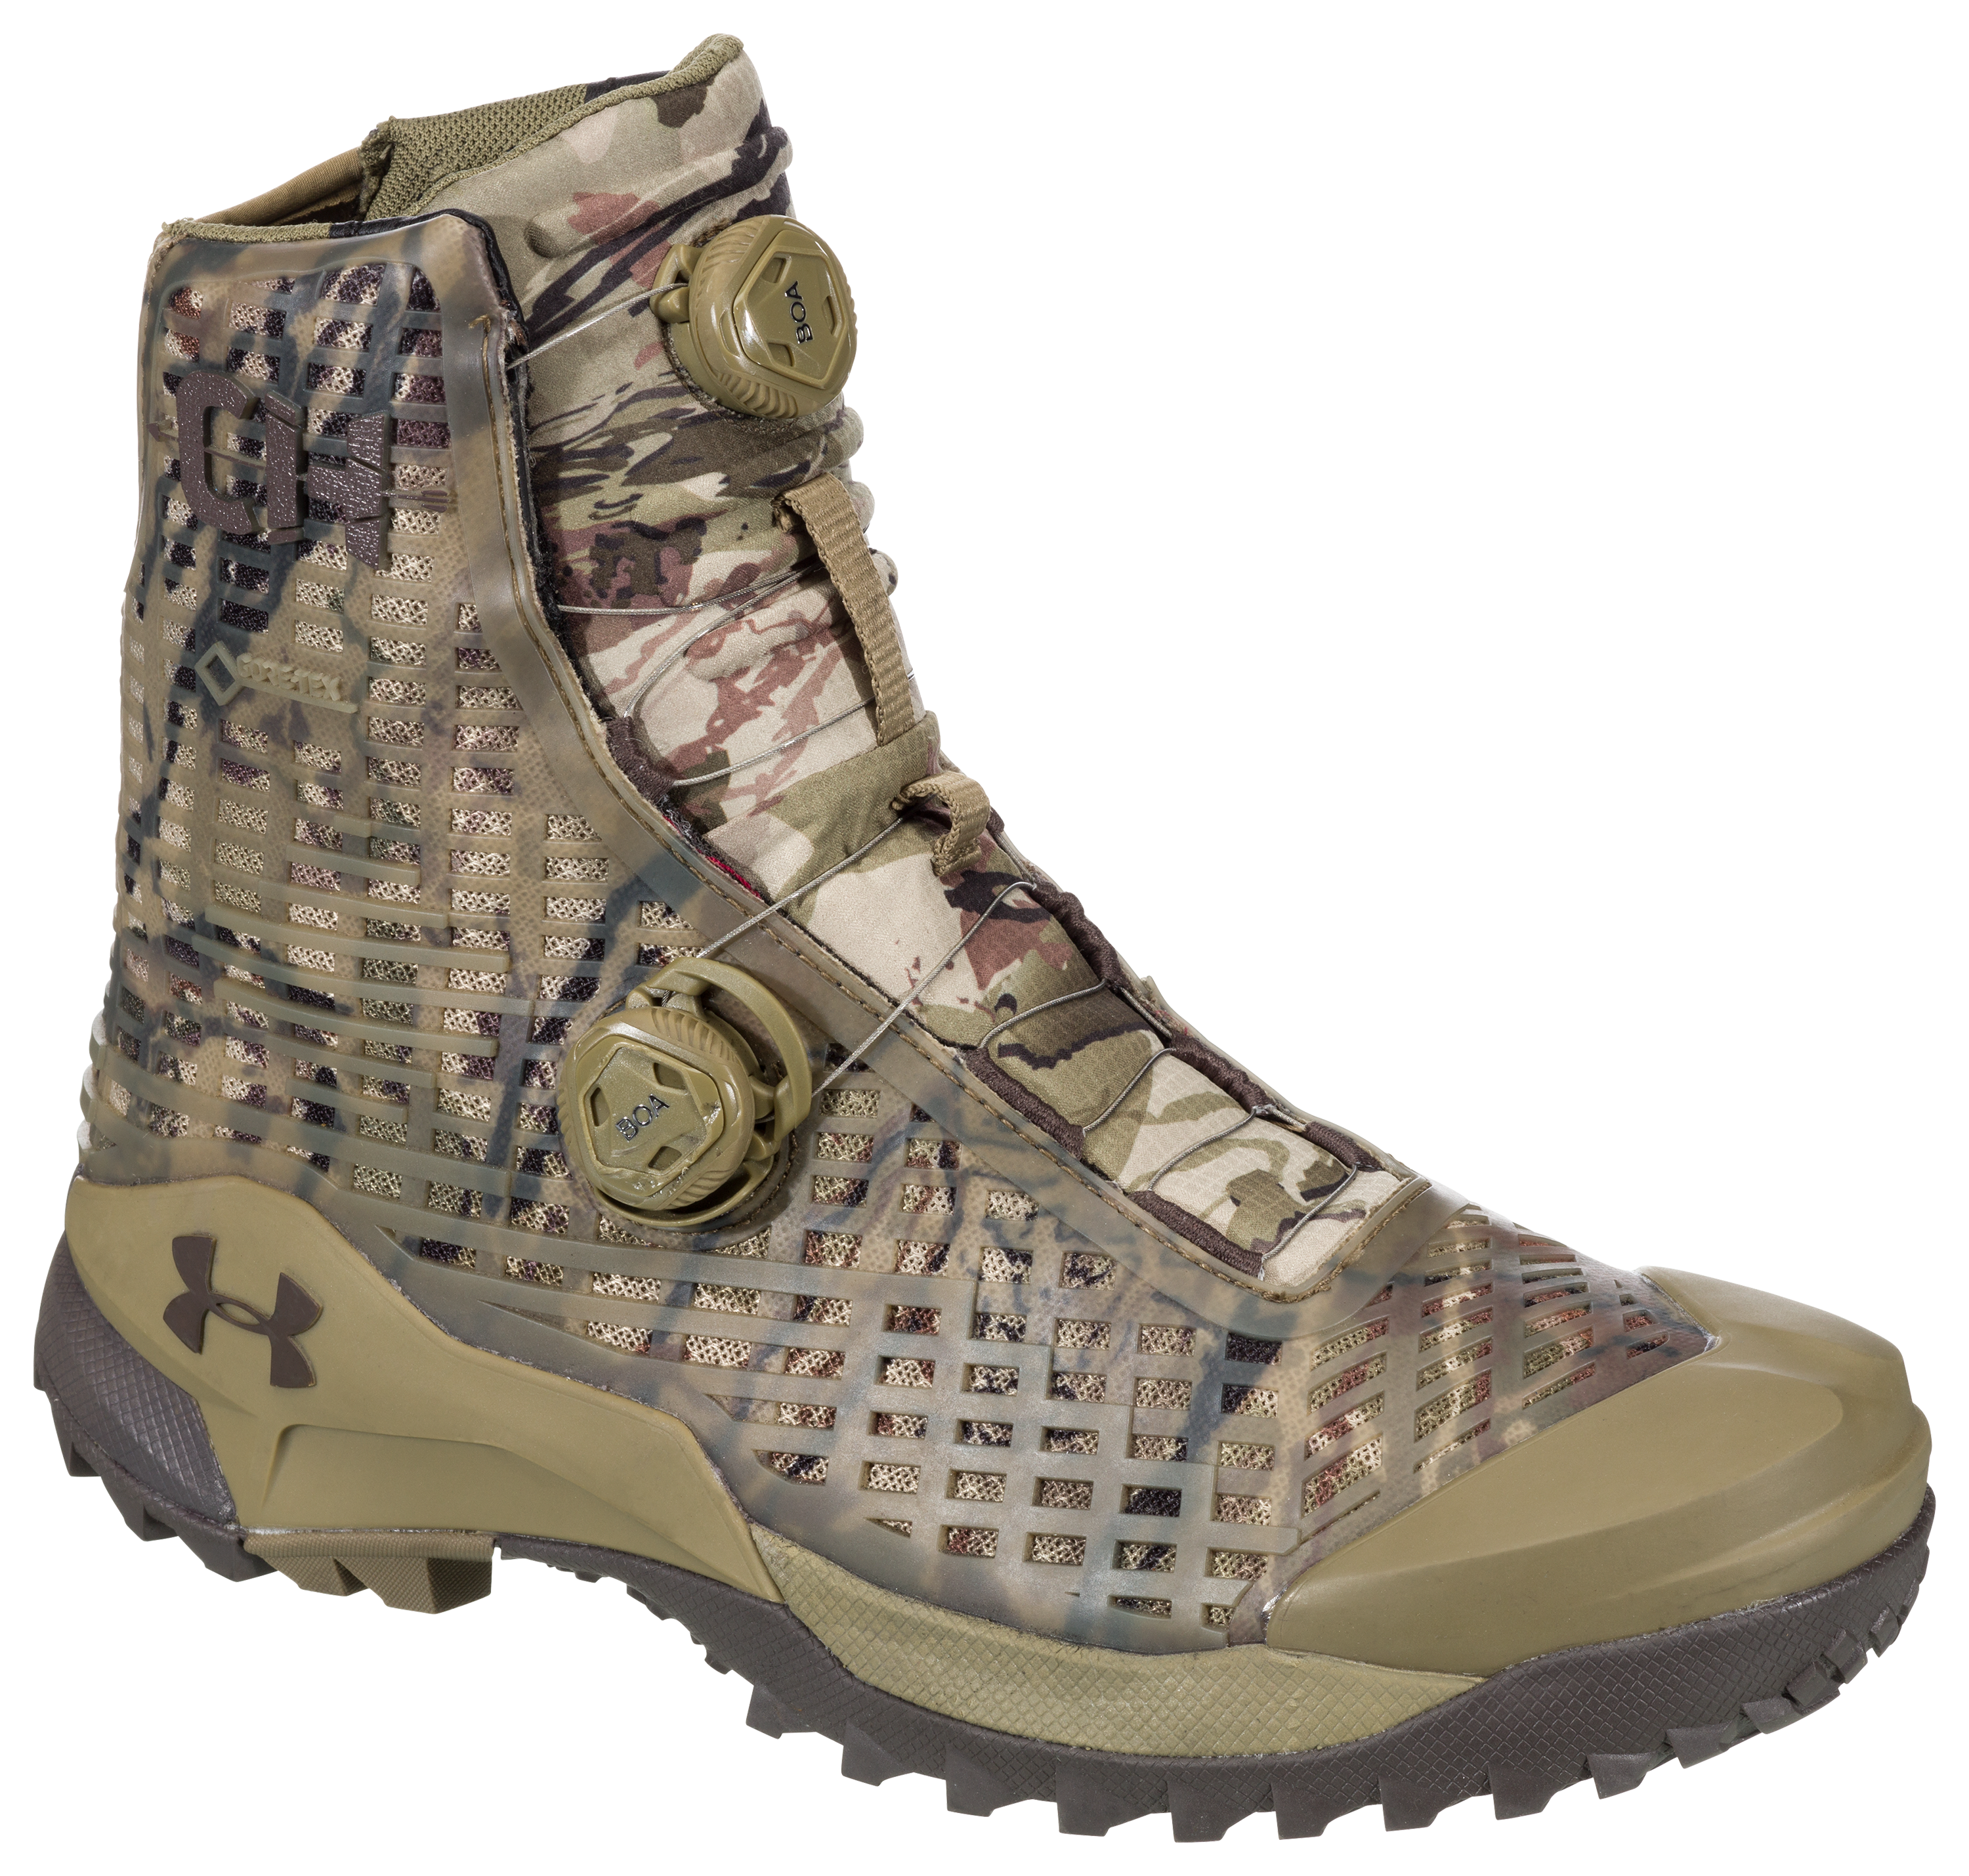 Under Armour CH1 GTX GORE-TEX Tactical Boots  for Men - Bayou Ridge Reaper Camo Barren - 9M